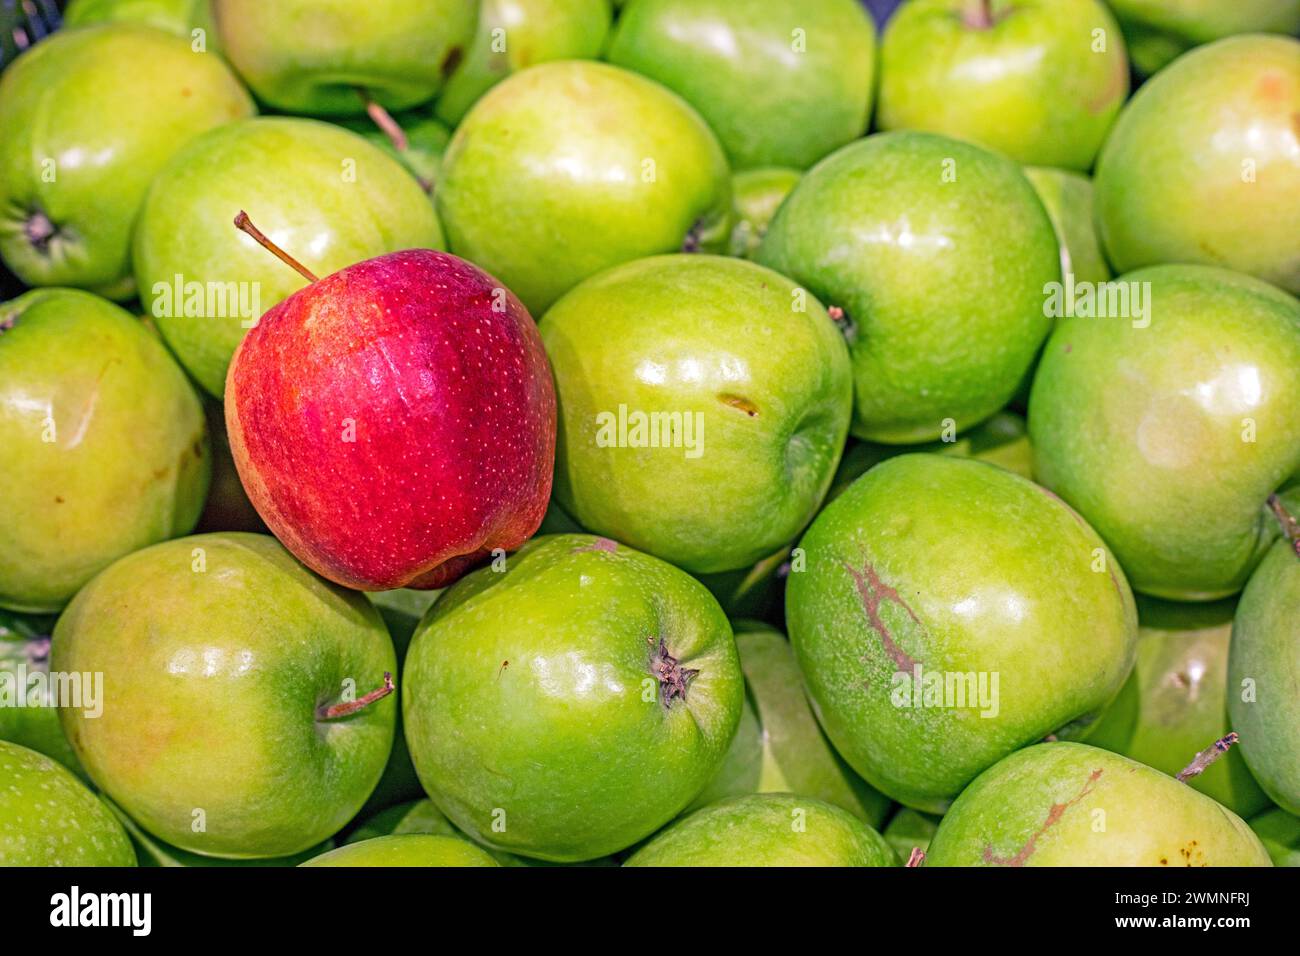 Ein roter Apfel liegt auf grünen Äpfeln. Authentizität Stockfoto